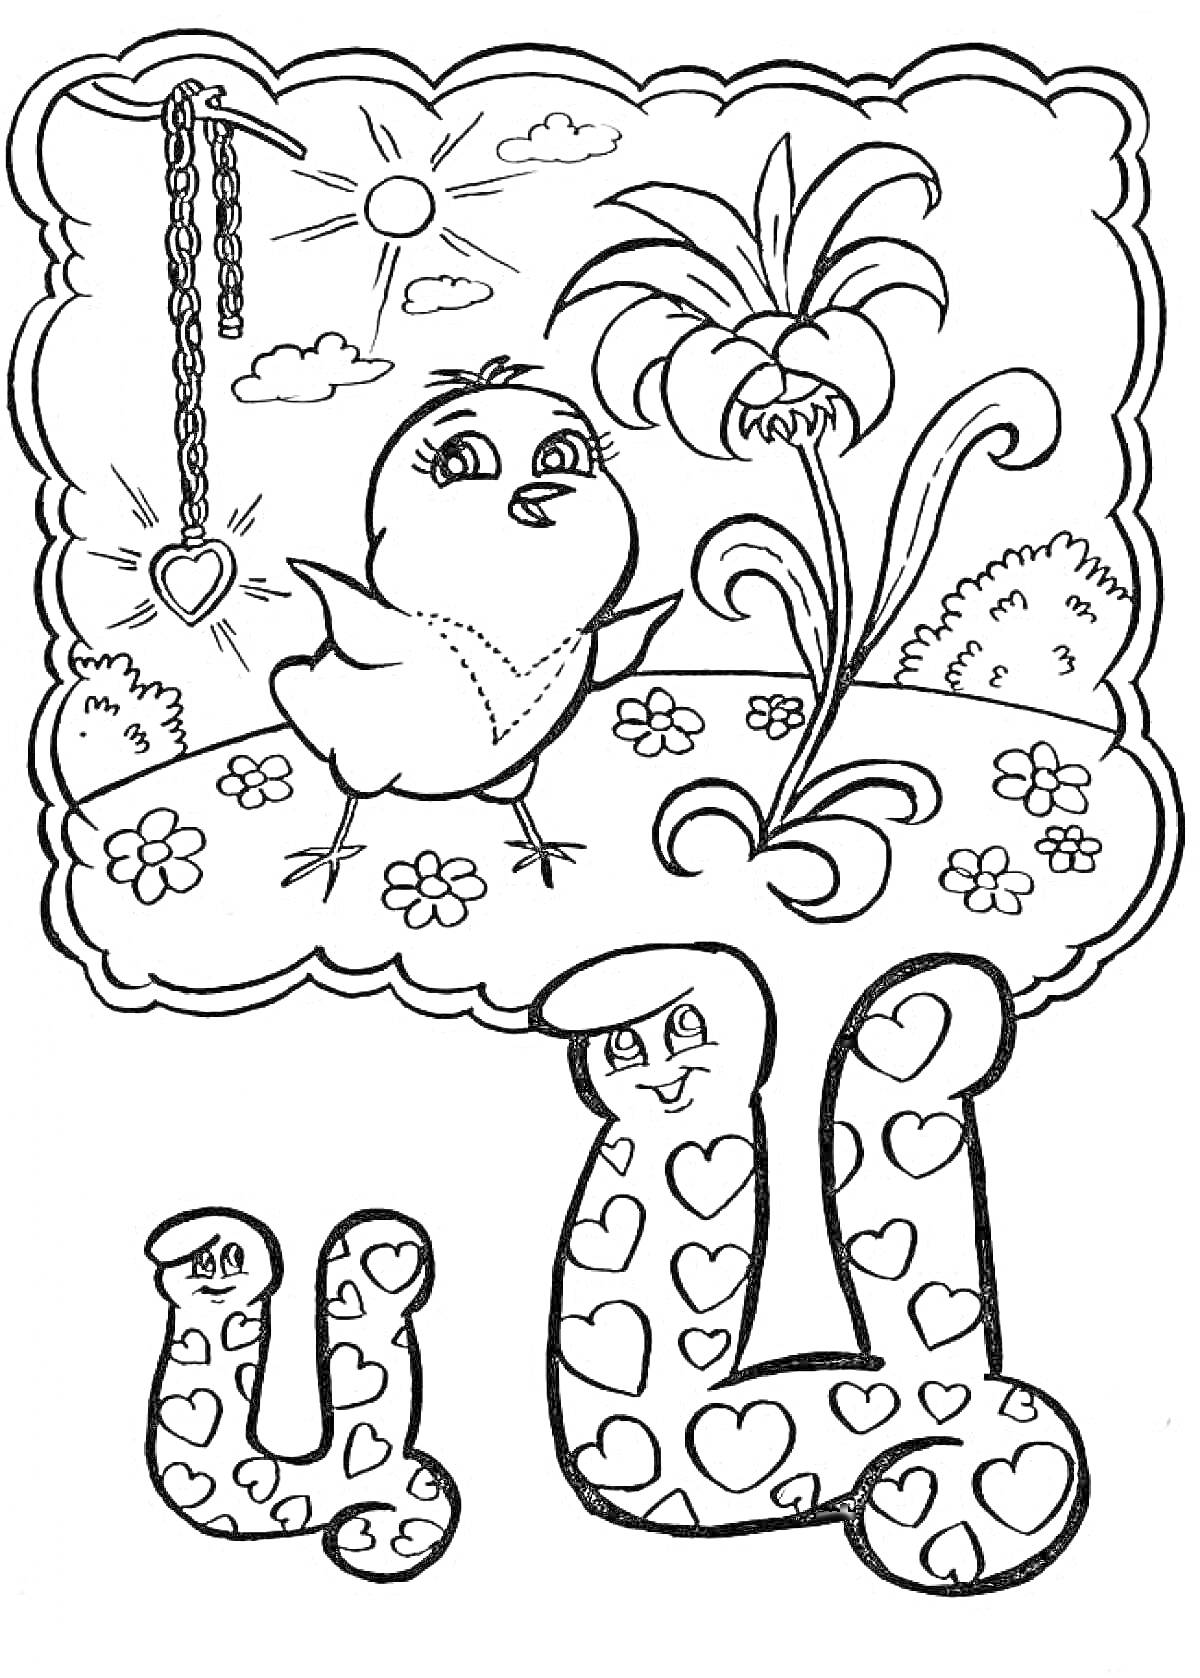 На раскраске изображено: Буква Ц, Солнце, Облака, Трава, Цветы, Сердца, Цепь, Цыплята